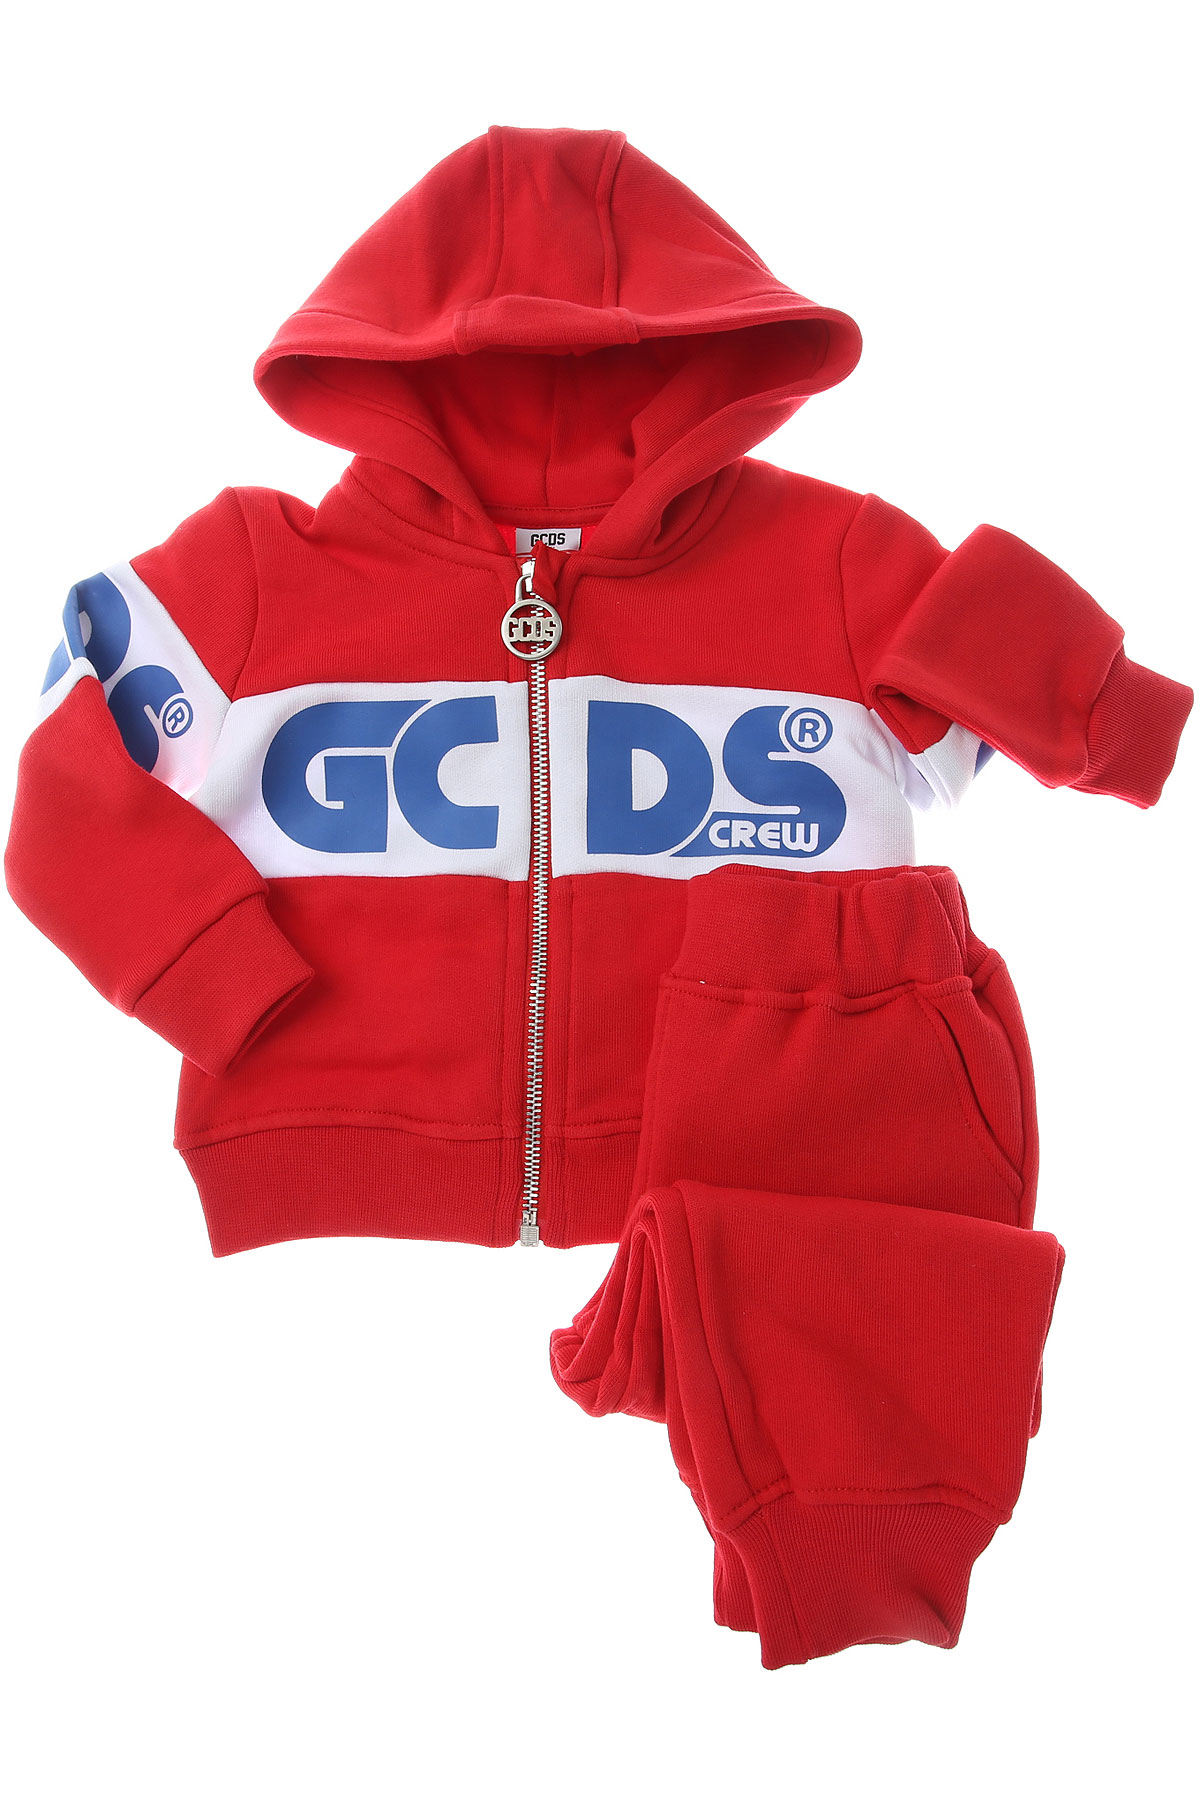 Baby Boy Clothing GCDS, Style code: 025796-040-